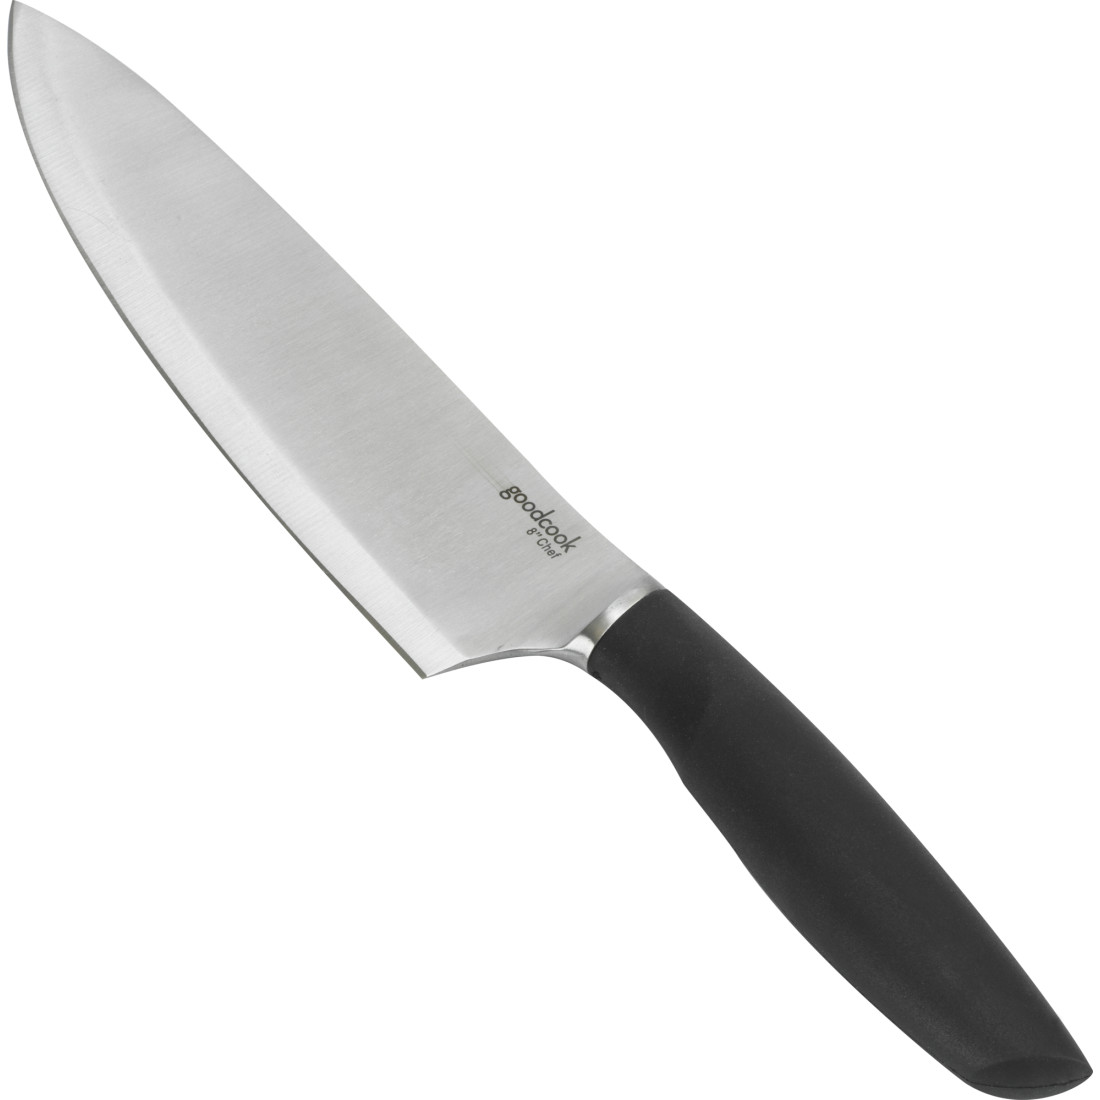 Chef Sac 8 Inch Chef Knife, Professional Chef Knife